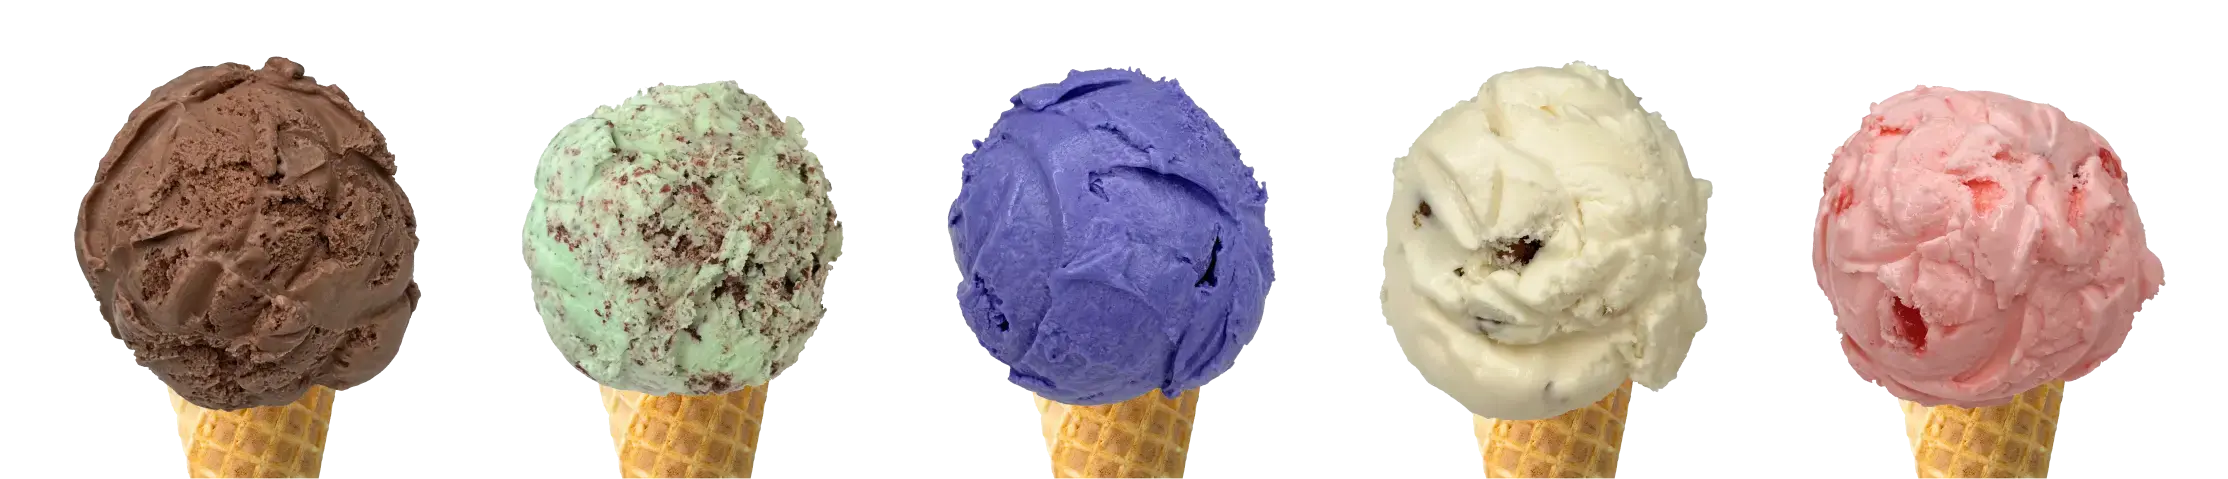 Assorted ice cream scoops on cones